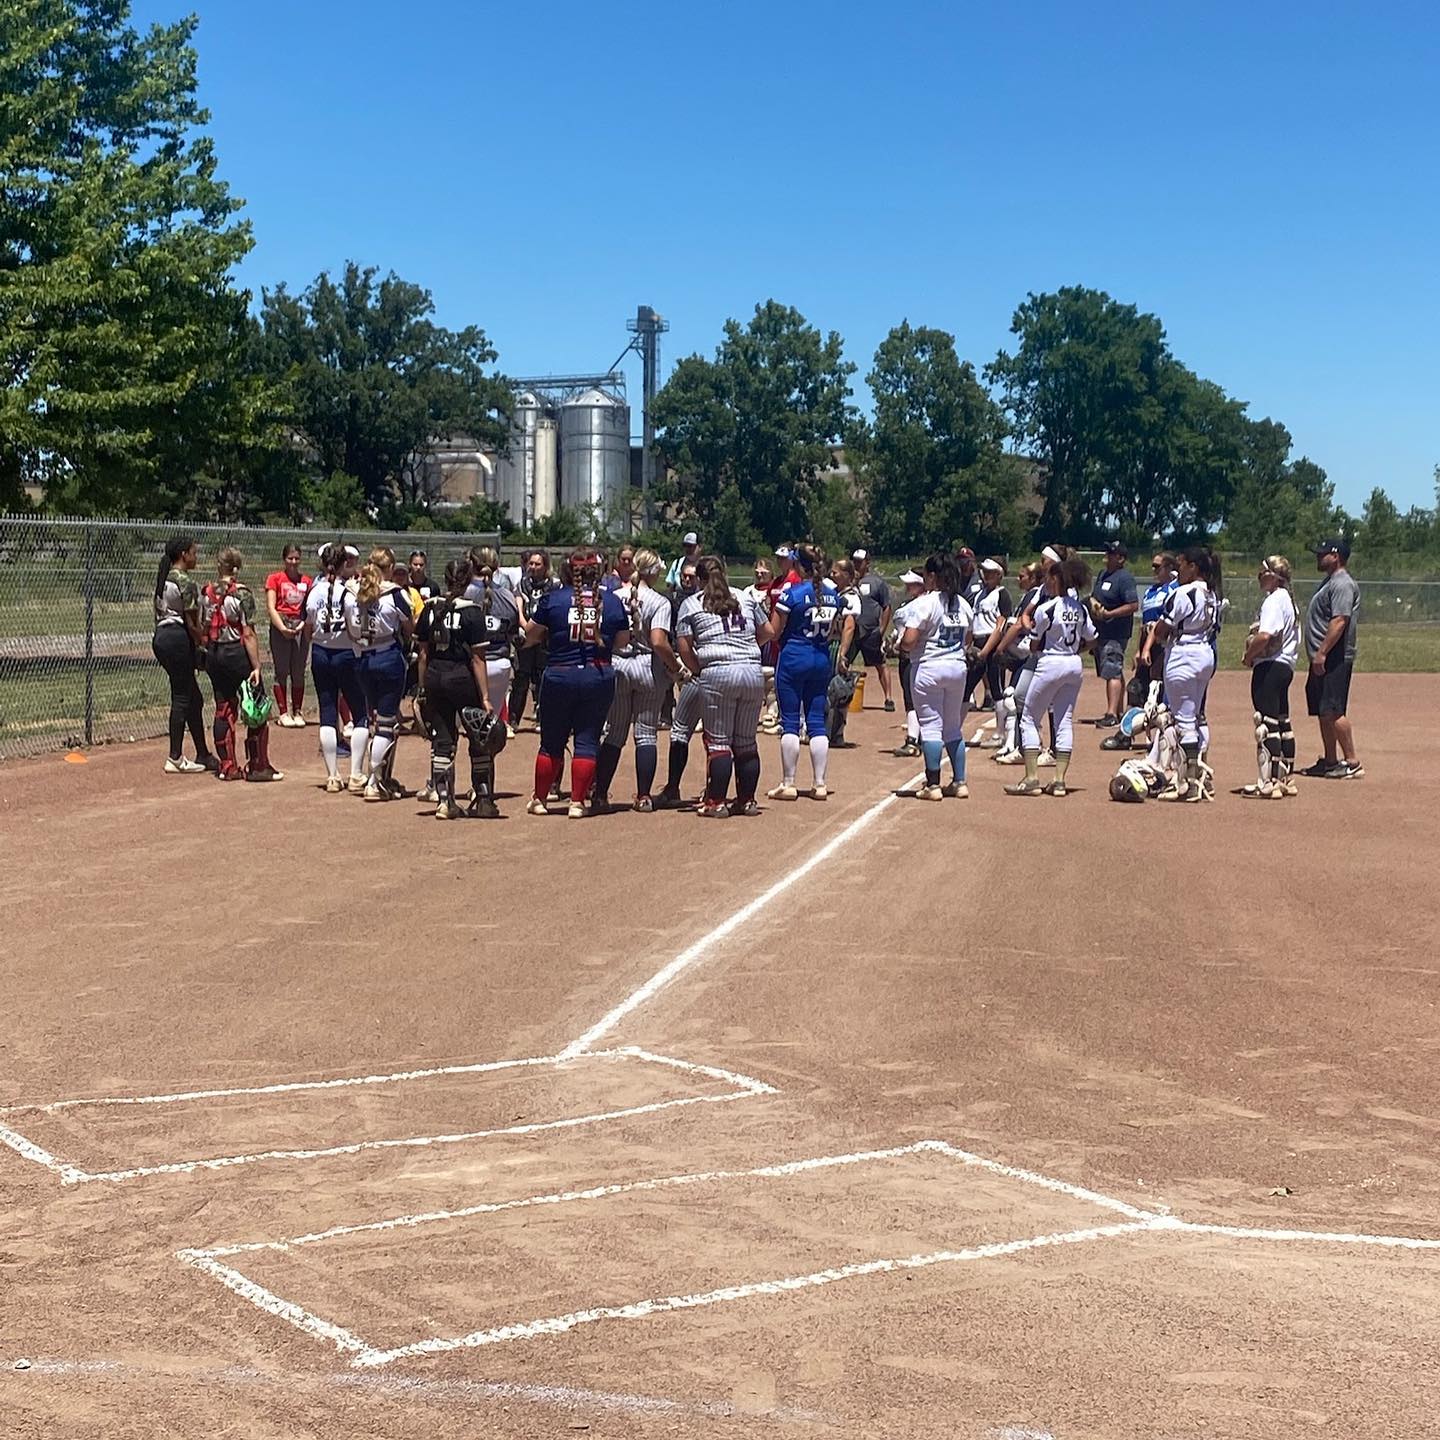 Women softball teams gathered on the field.